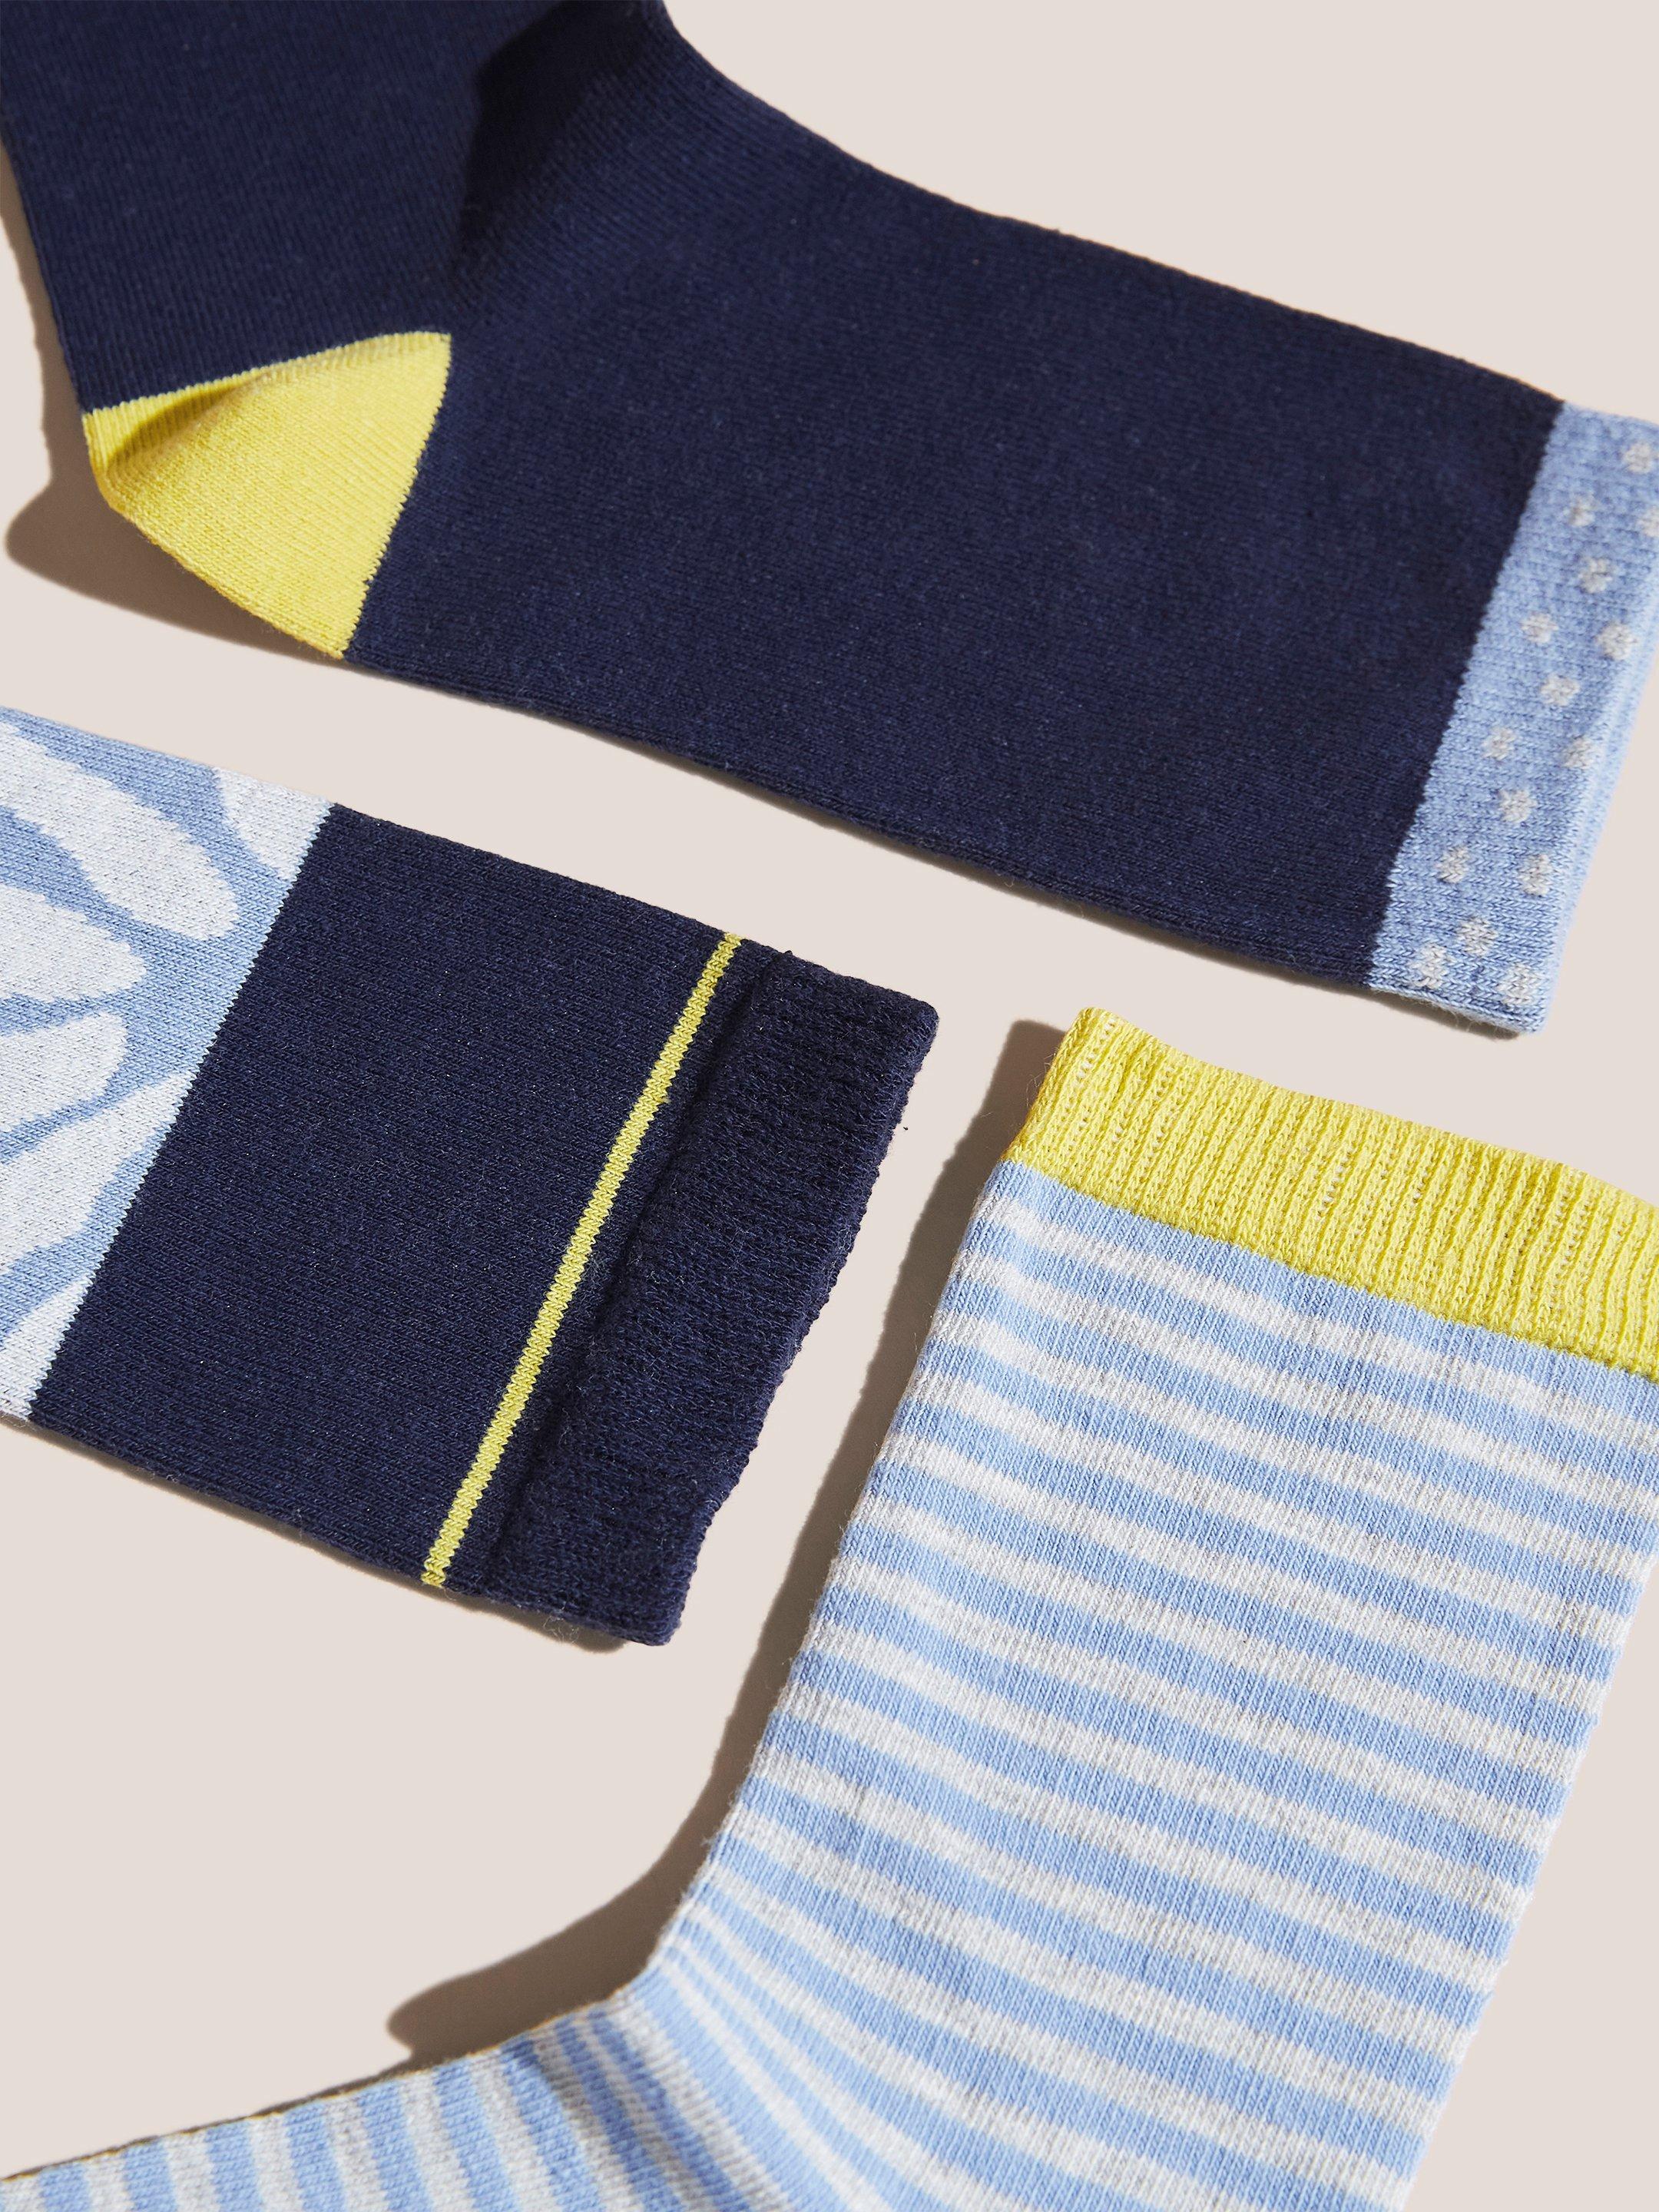 Smiley Daisy 3 Pack Socks in BLUE MLT - FLAT DETAIL